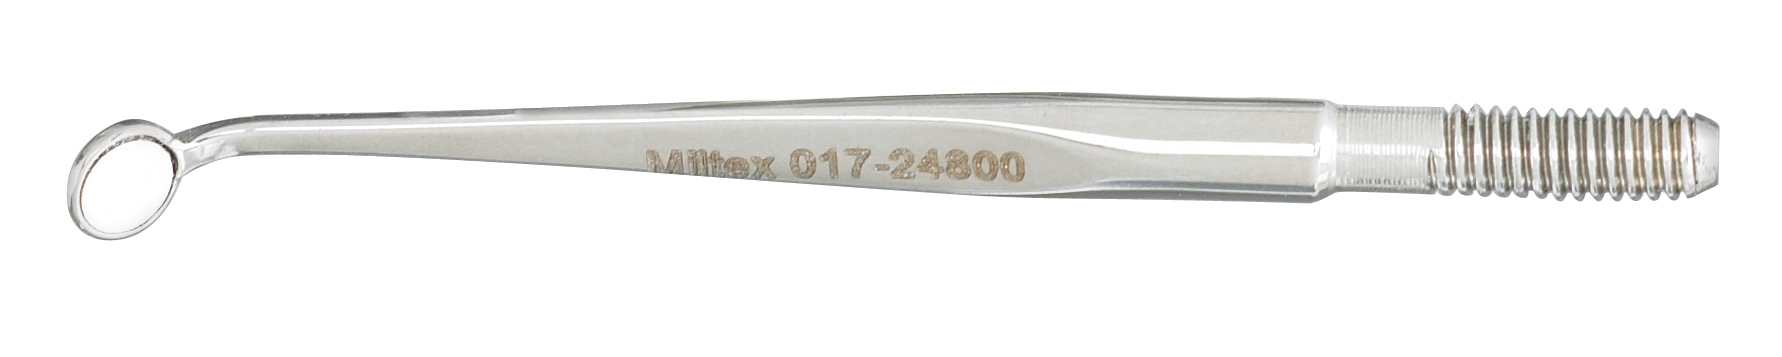 MILTEX MICRO MIRROR 3mm OVAL CONE SOCKET EA INTEGRA #017-24800